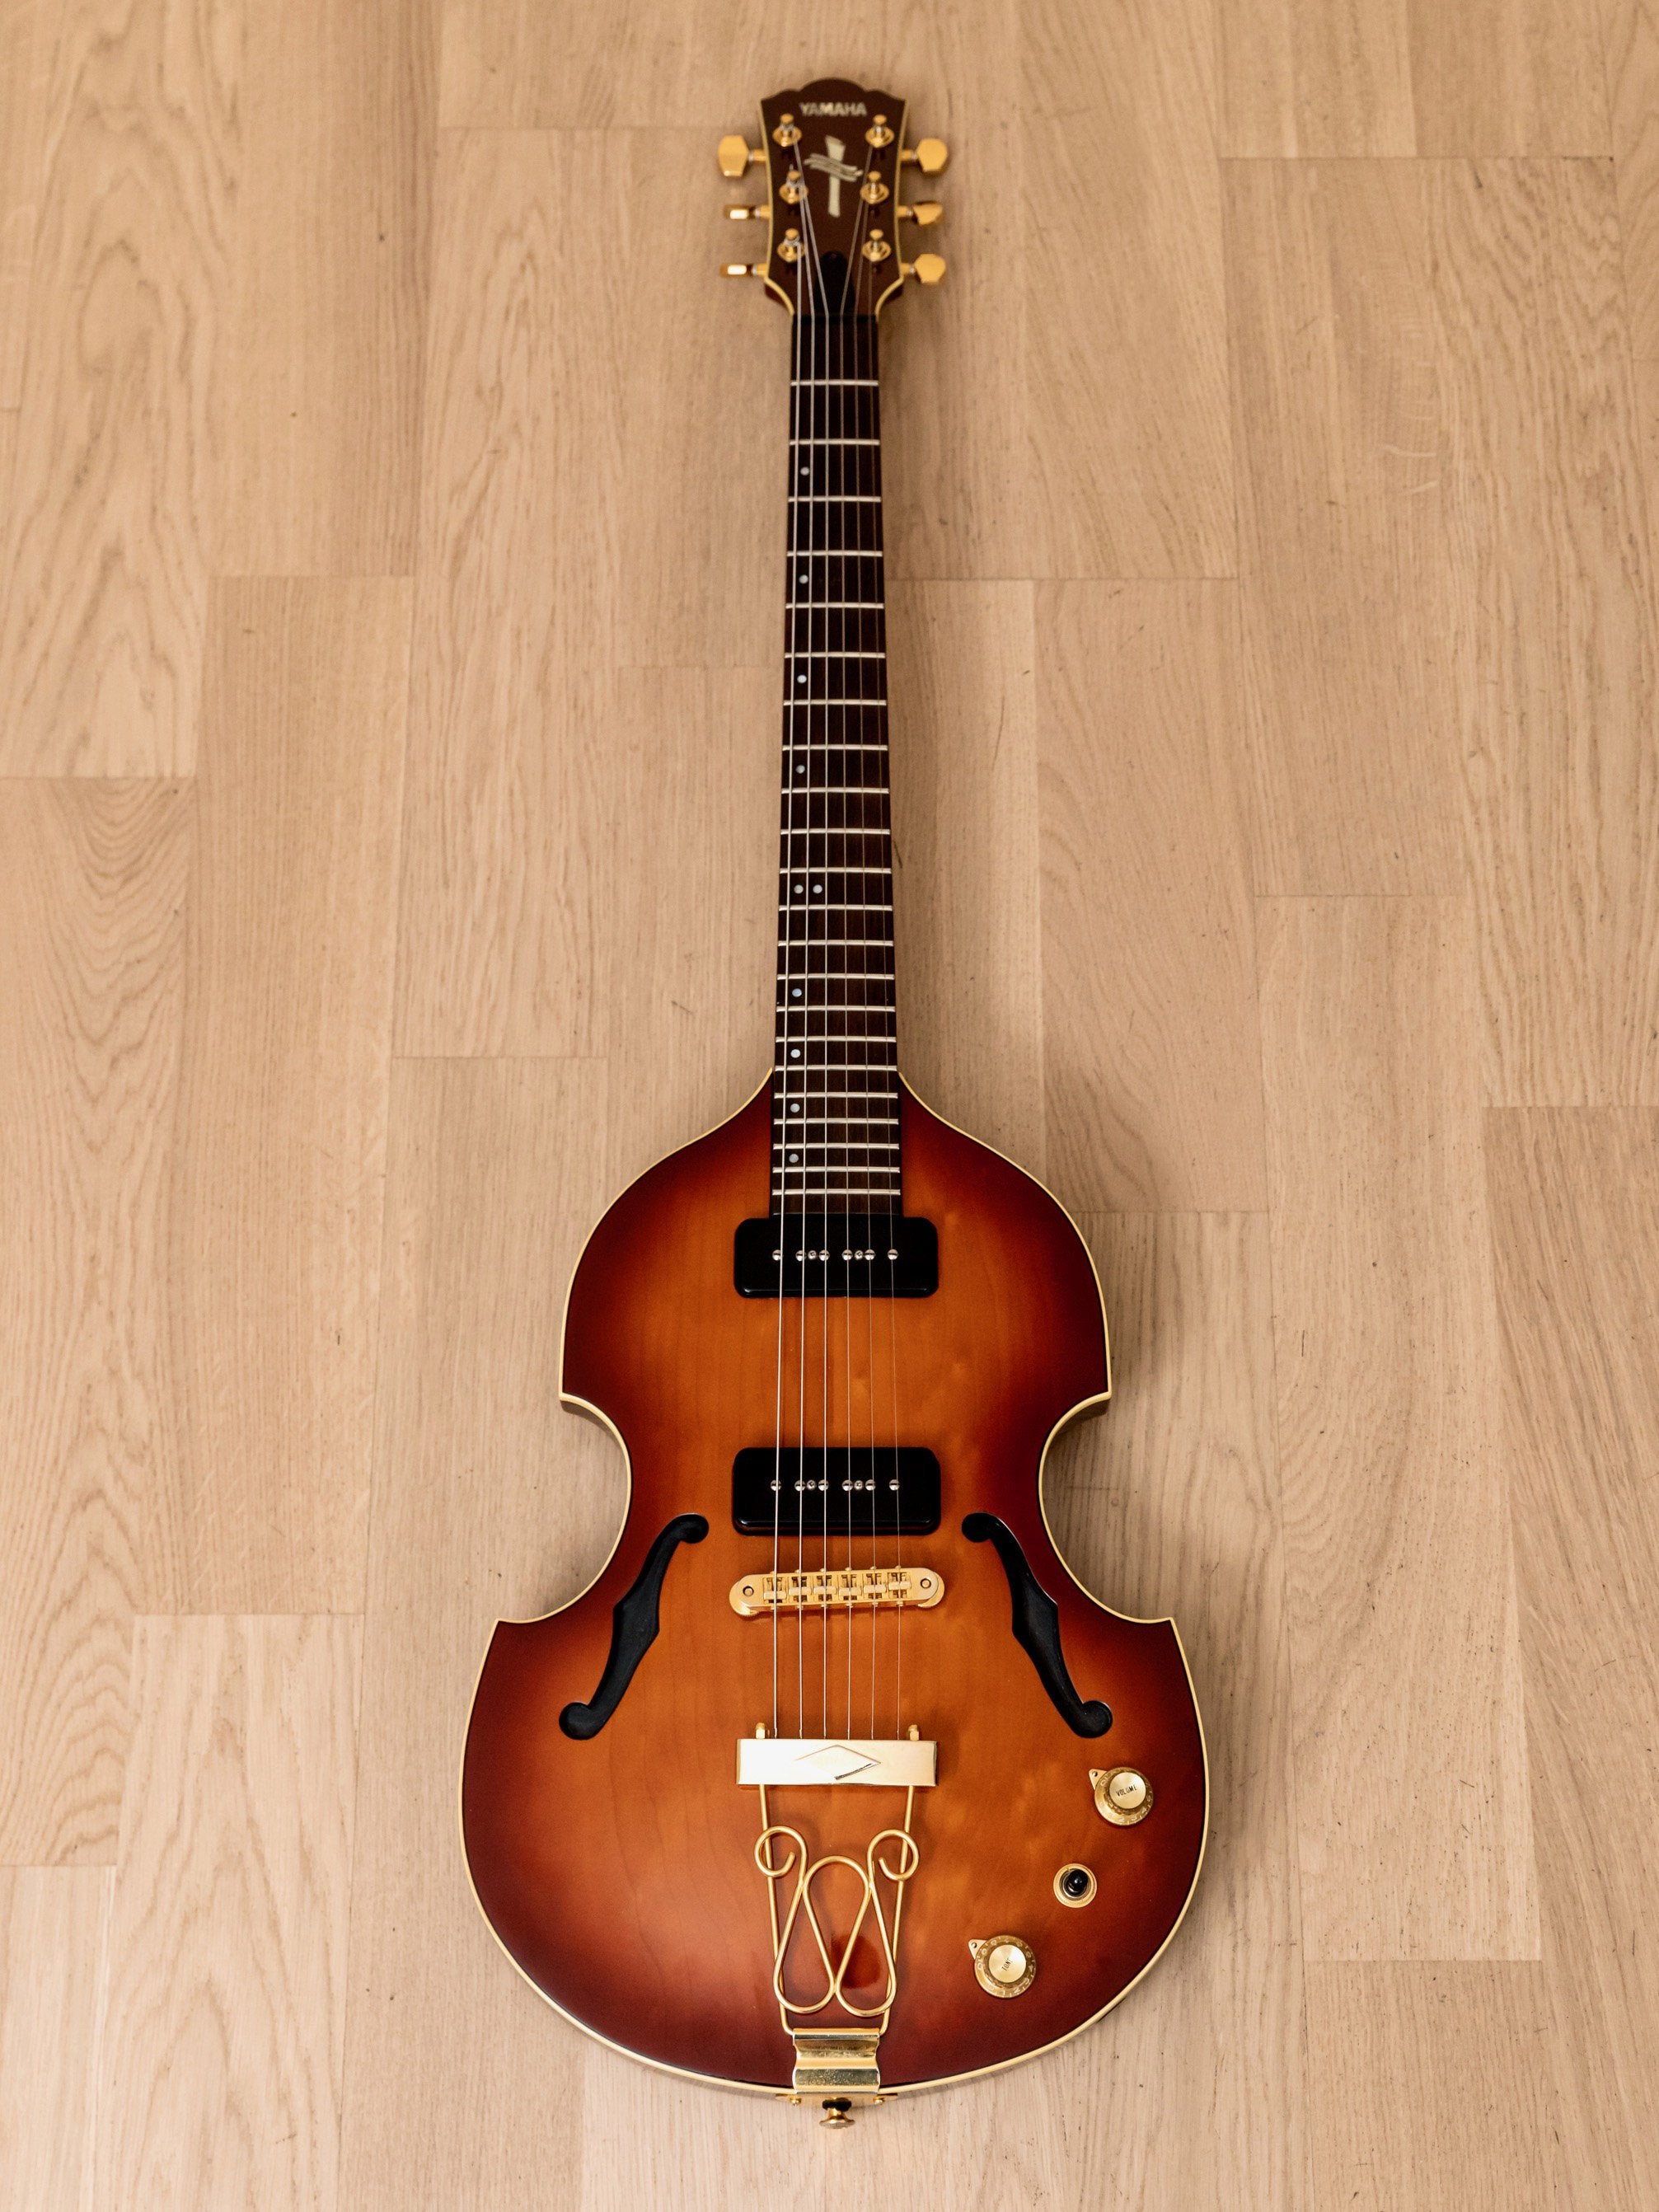 1993 Yamaha VG Standard Aska Signature Model Violin Guitar Sunburst w/ P-90s, Japan